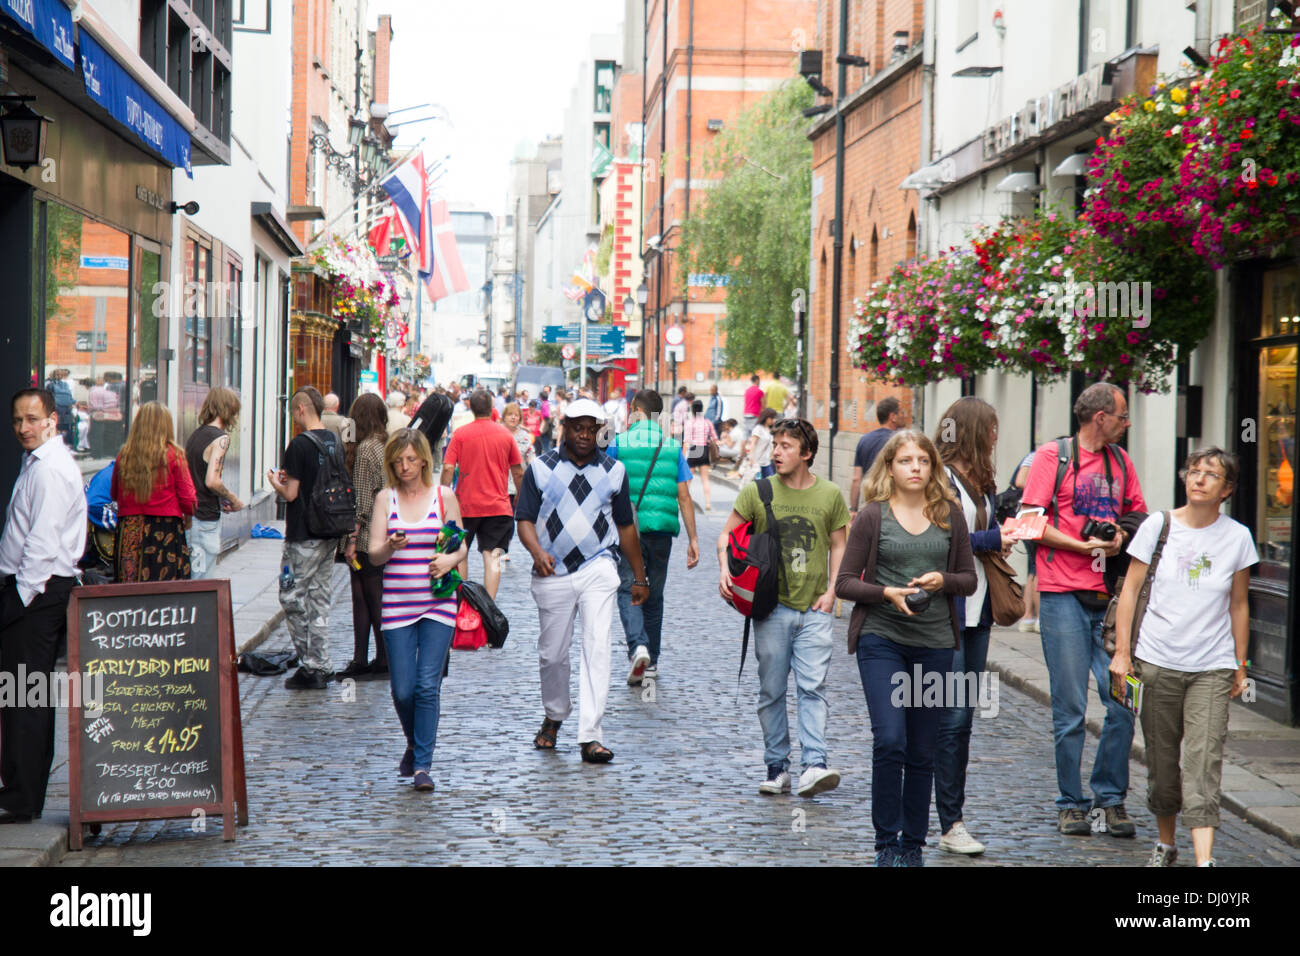 Belebte Straße im Temple Bar Bezirk Dublin Irland Stockfoto